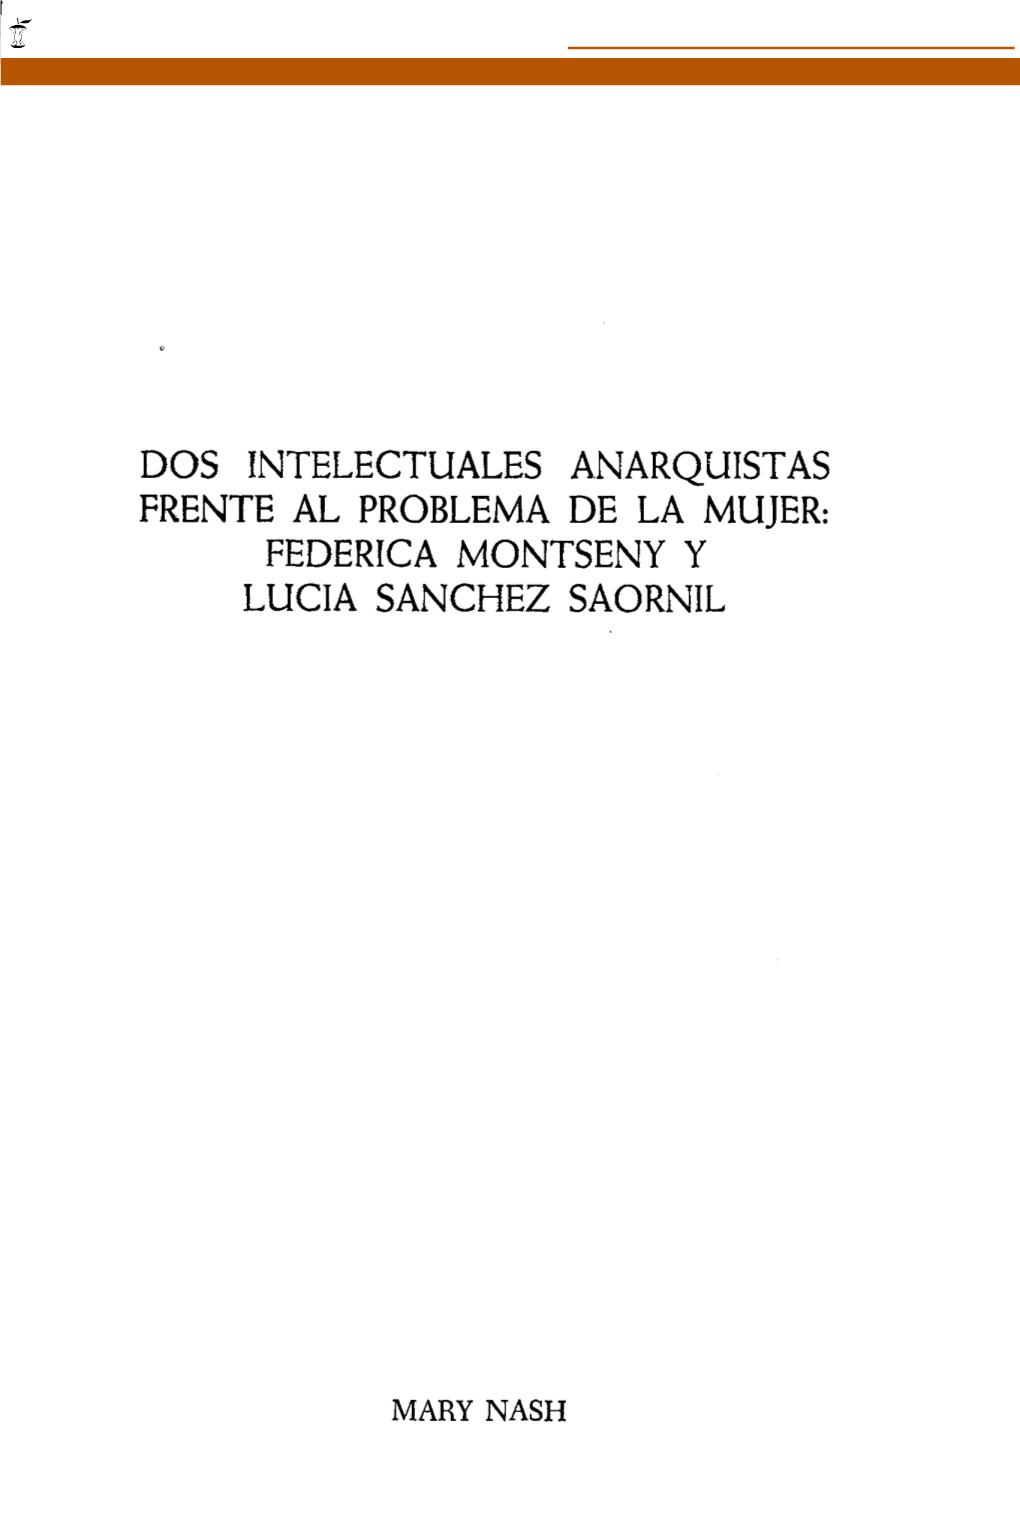 Federica Montseny Y Lucia Sanchez Saornil